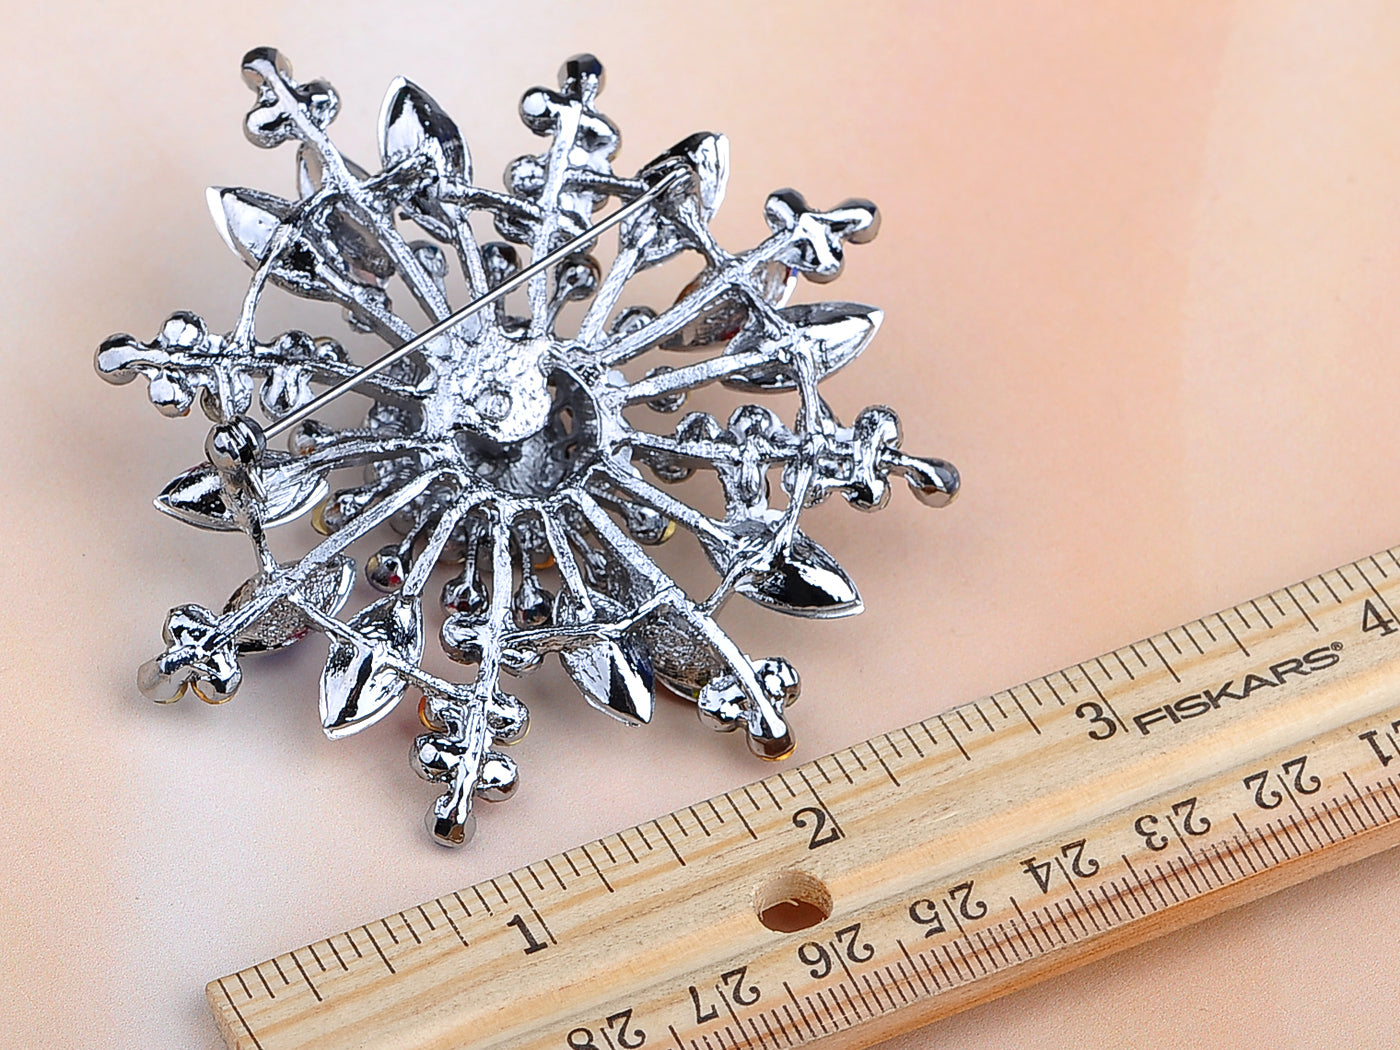 Colorful Sunburst Snowflake Shaped Pin Brooch